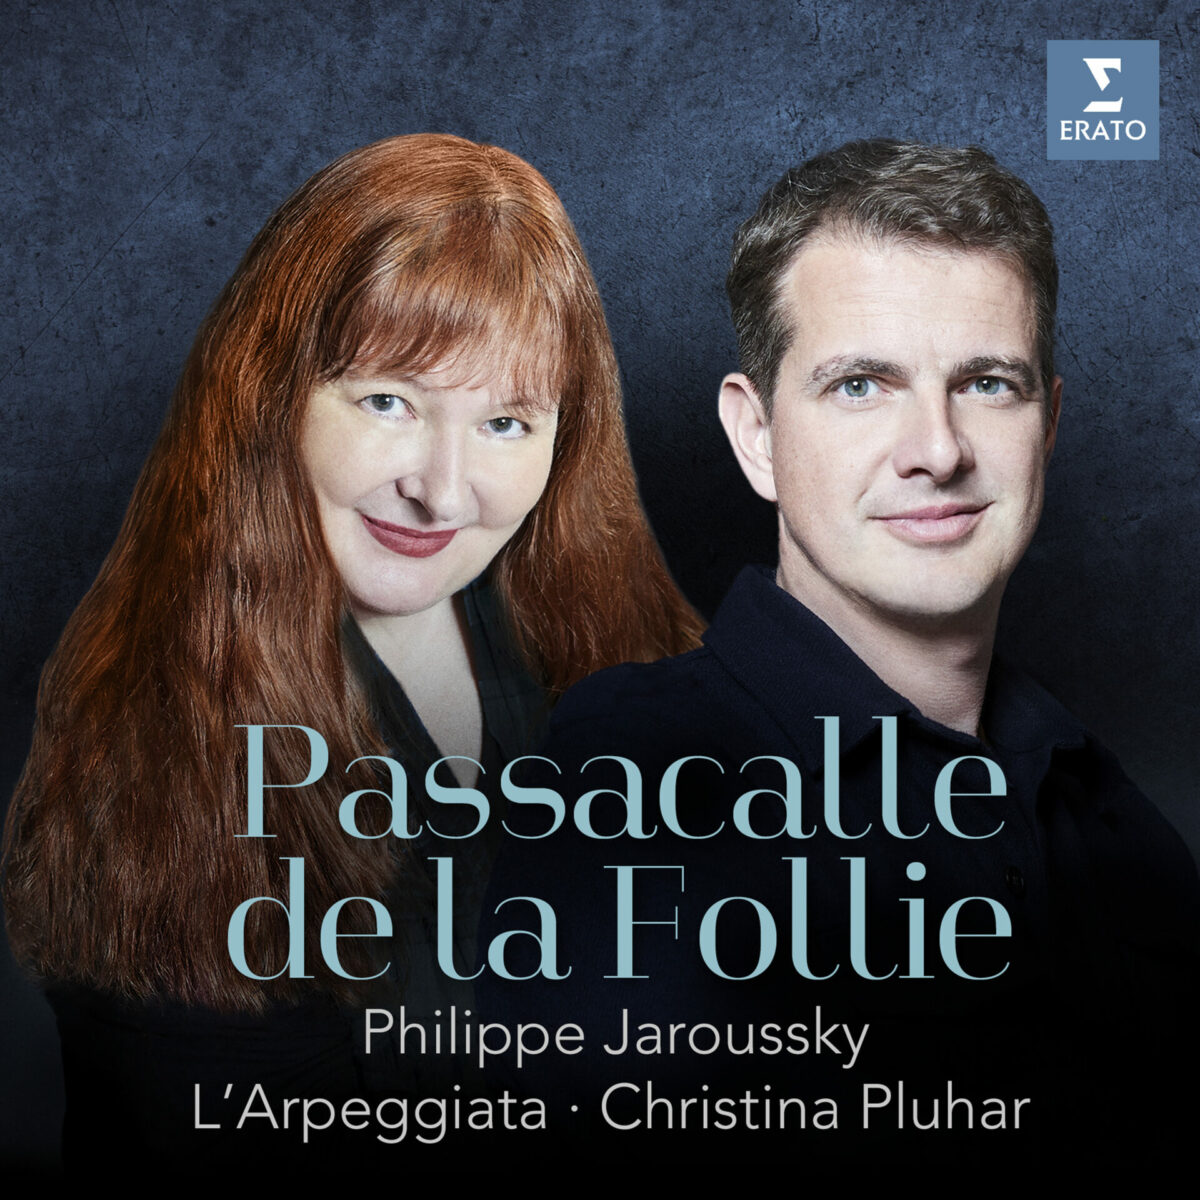 Passacalle de la Follie, L’Arpeggiata, Philippe Jaroussky und Christina Pluhar  klassik-begeistert.de, 27.April 2023